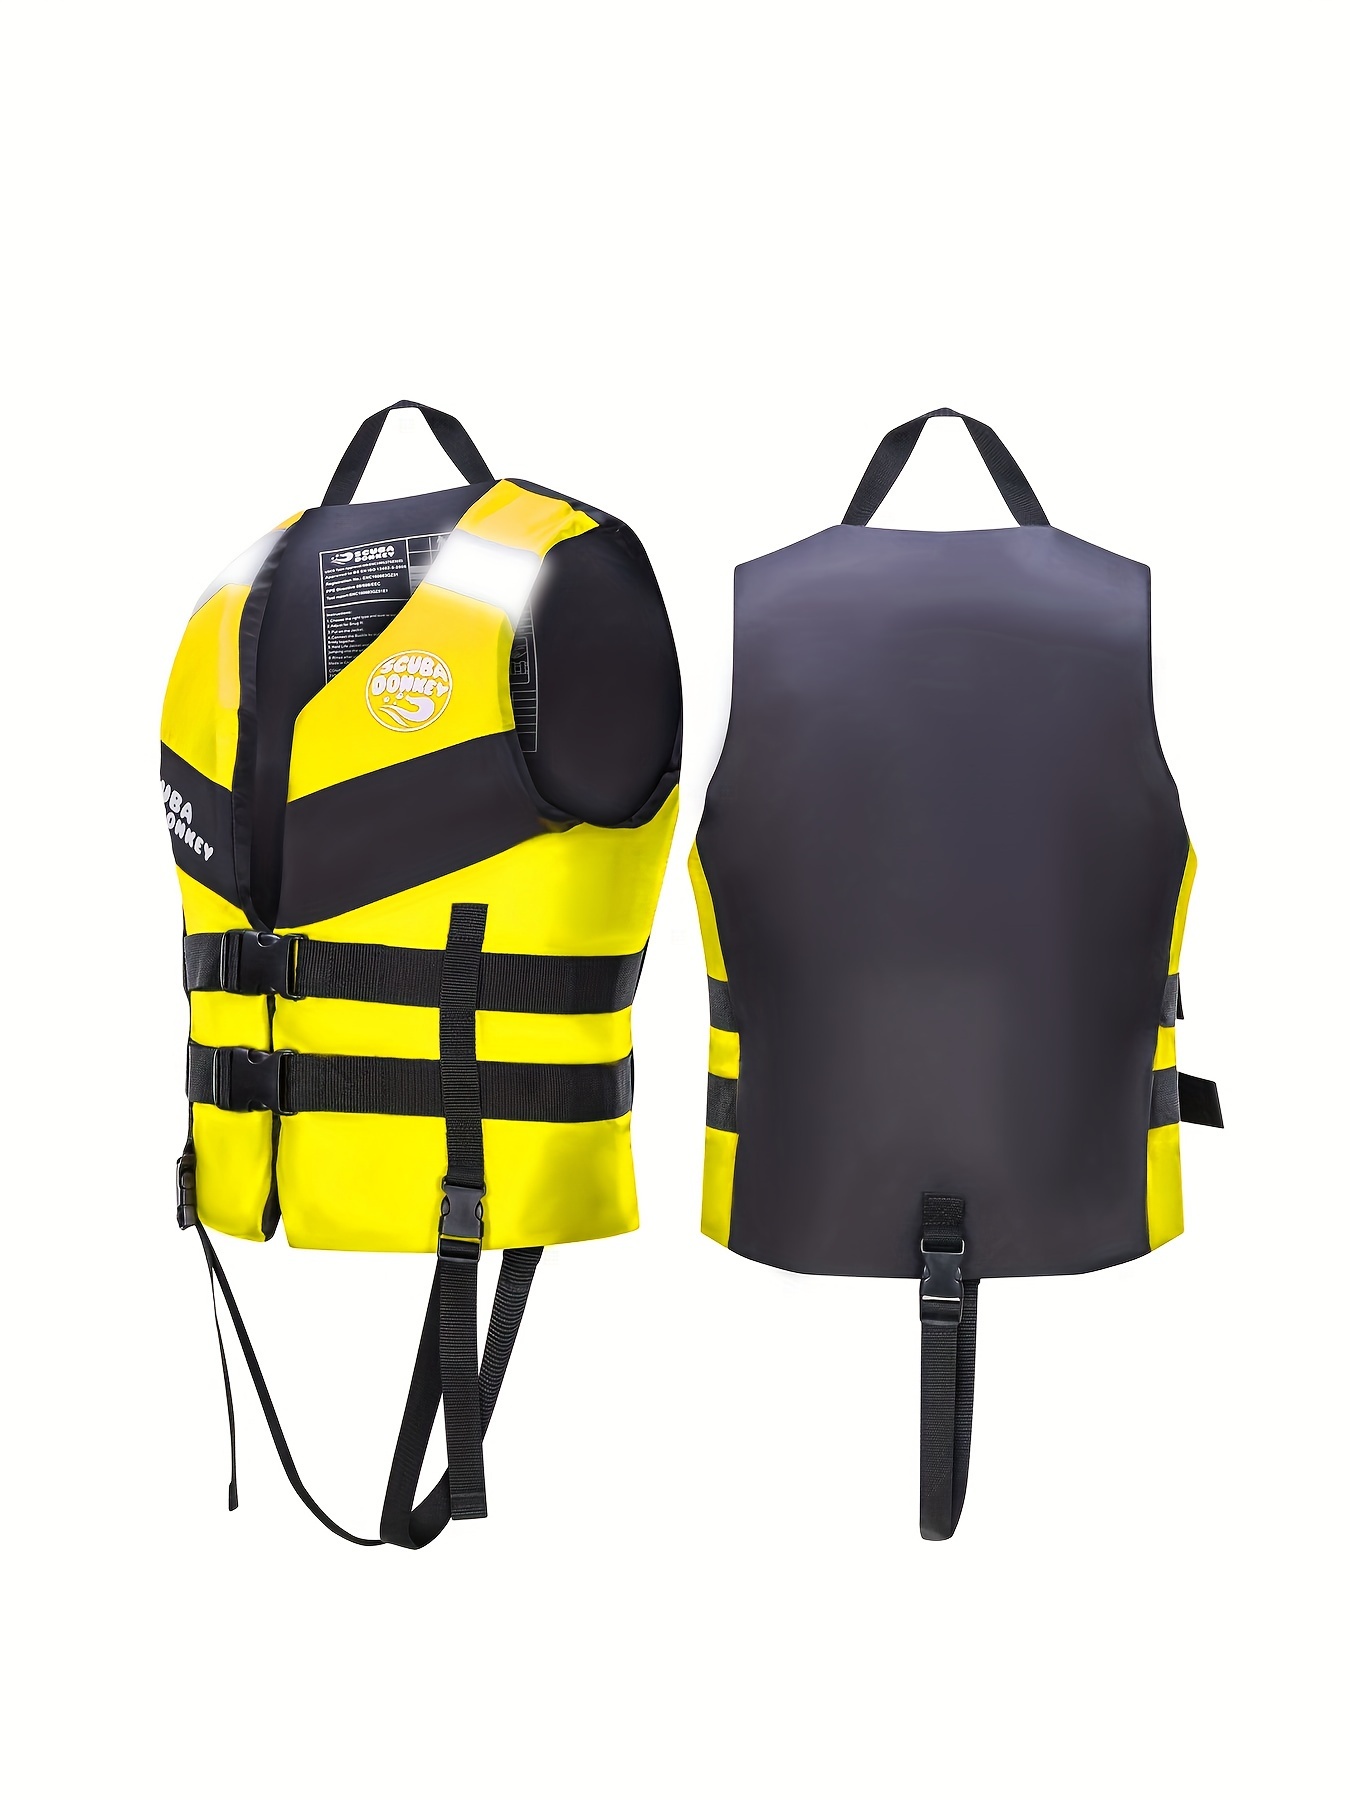 Fly Fishing Life Vest Pack Breathable Kayaking Life Jacket Safety